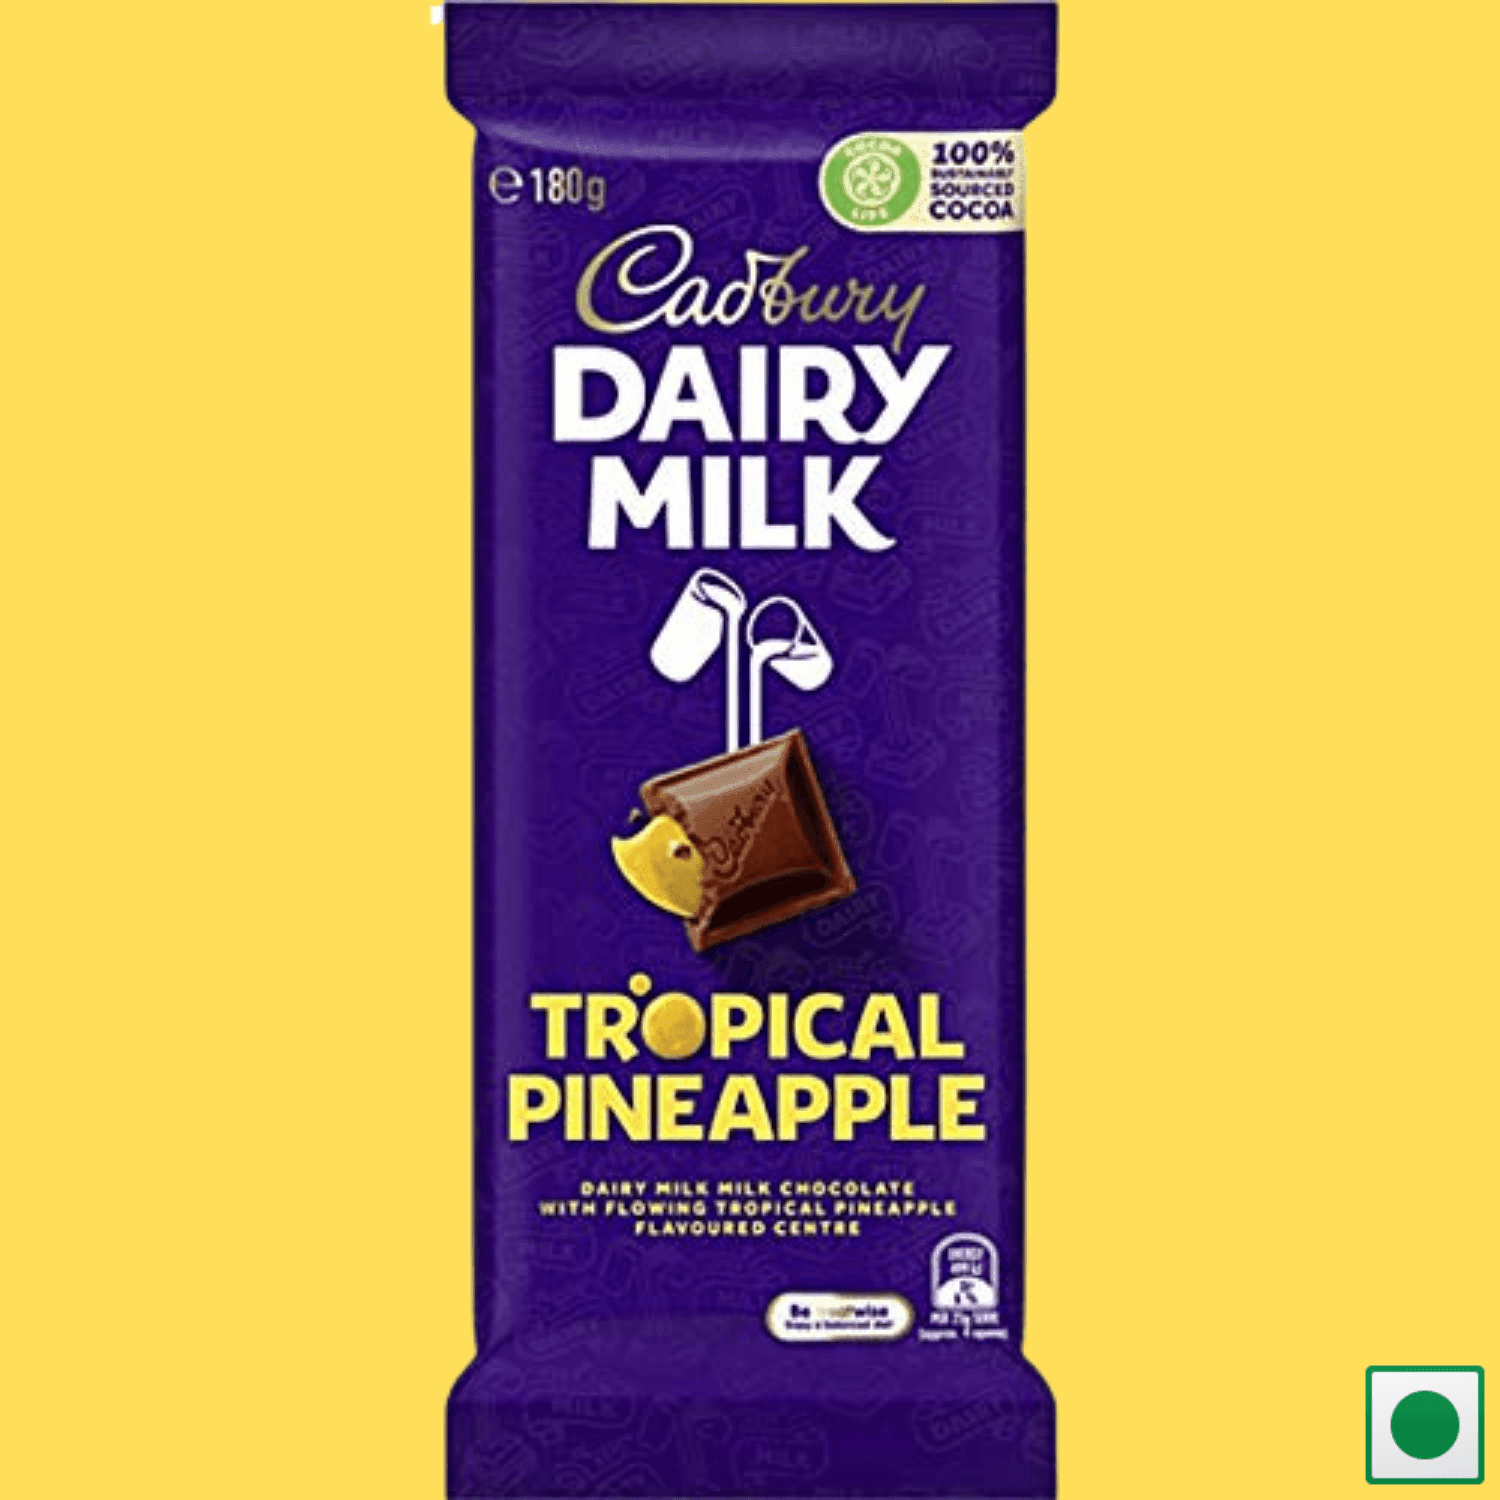 Cadbury Dairy Milk Tropical Pineapple Milk Chocolate,180g (Australian Imported) - Super 7 Mart